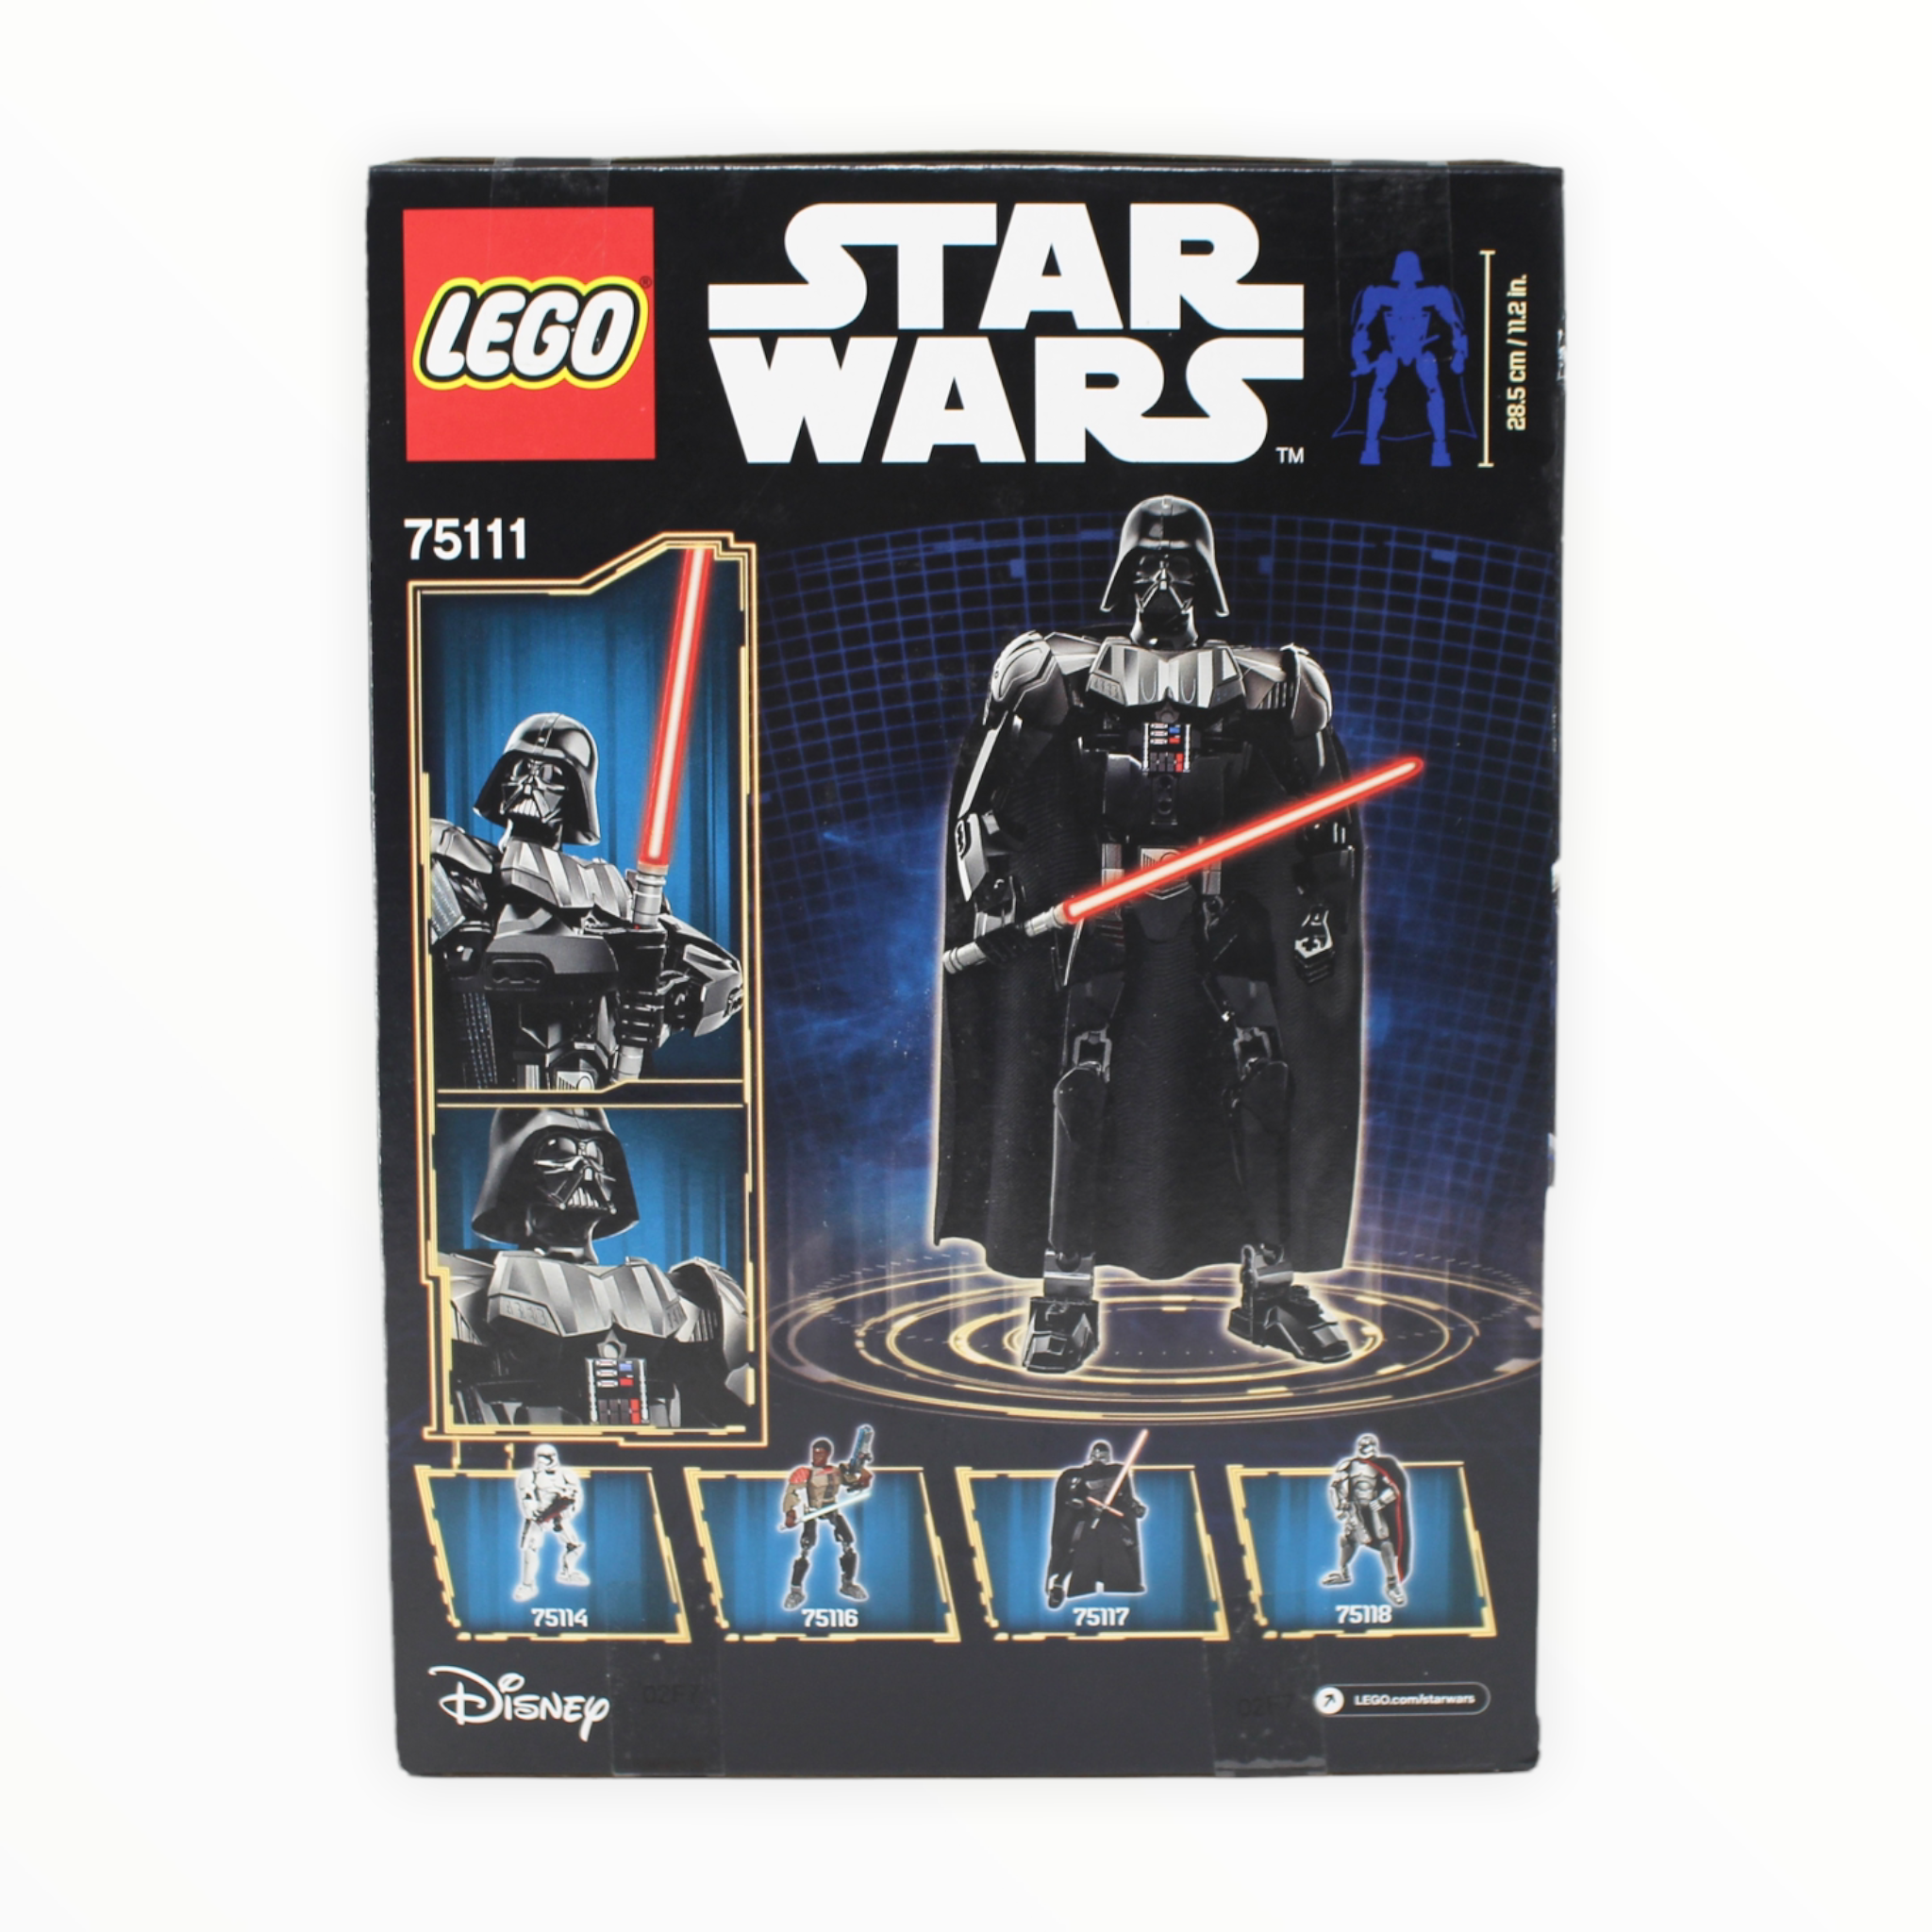 Retired Set 75111 Star Wars Buildable Figures Darth Vader